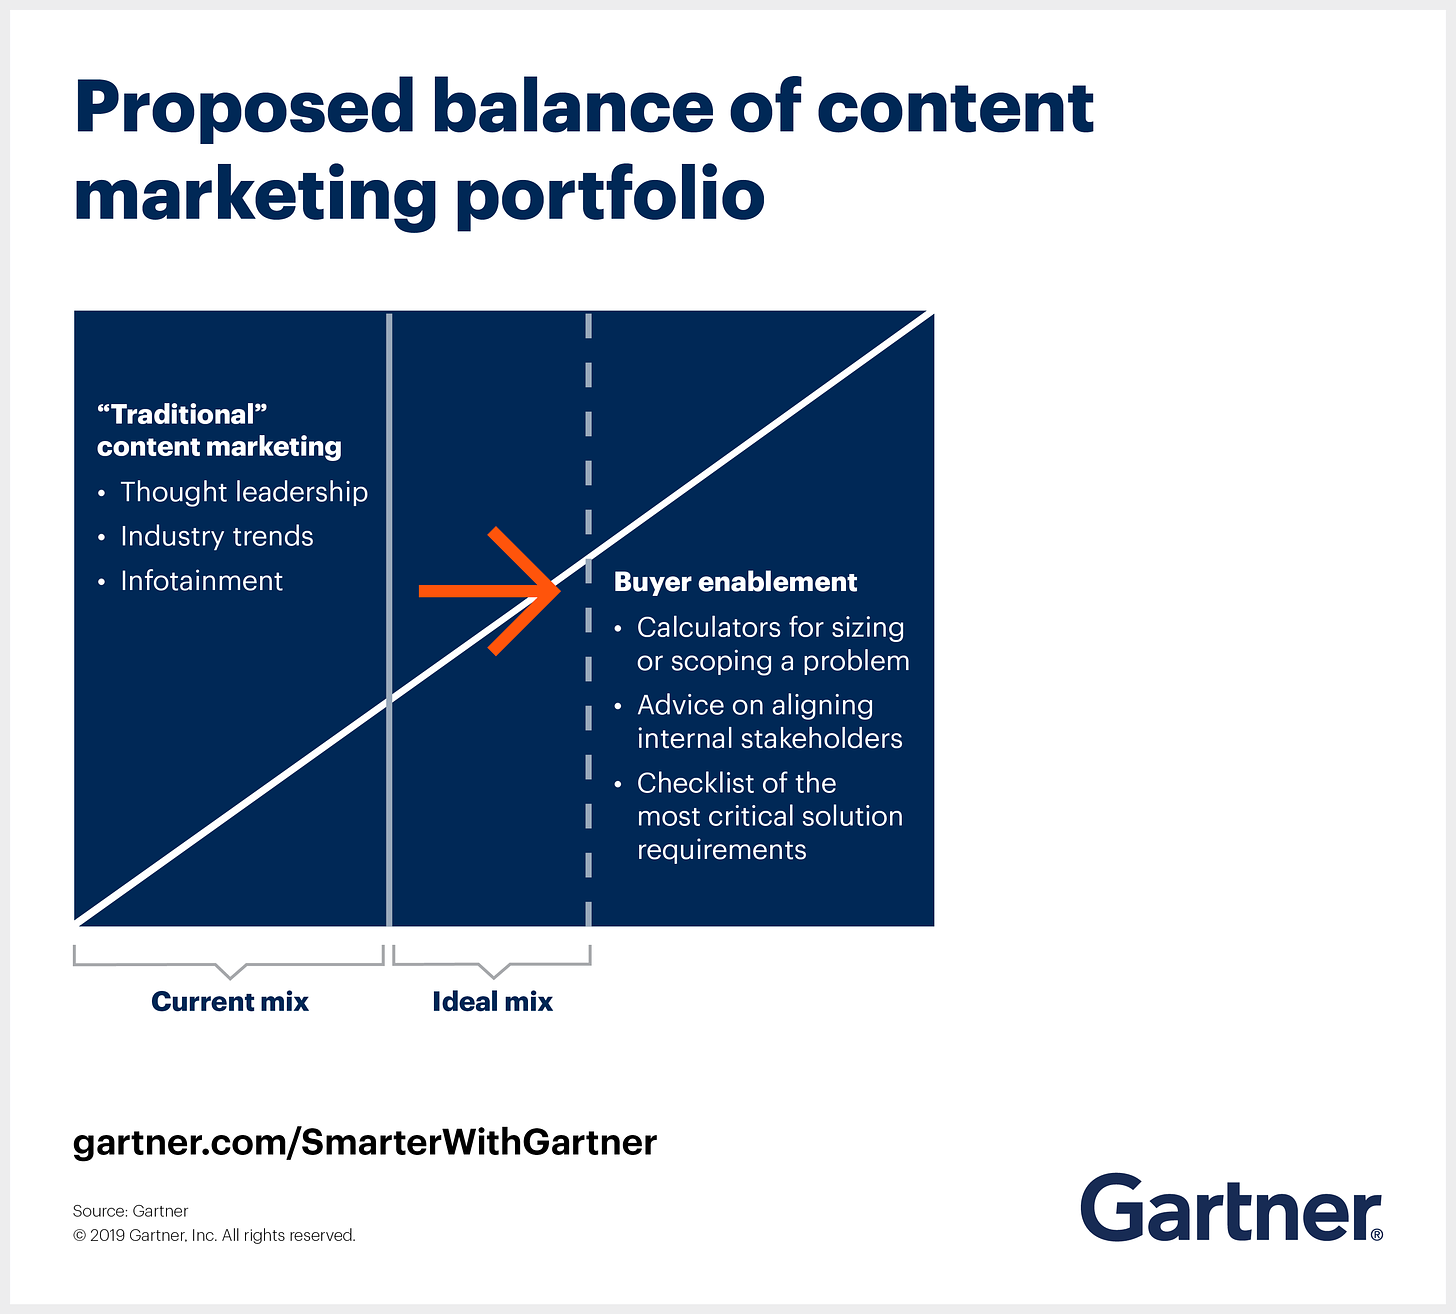 Gartner on how marketers should balance their content marketing portfolio. 